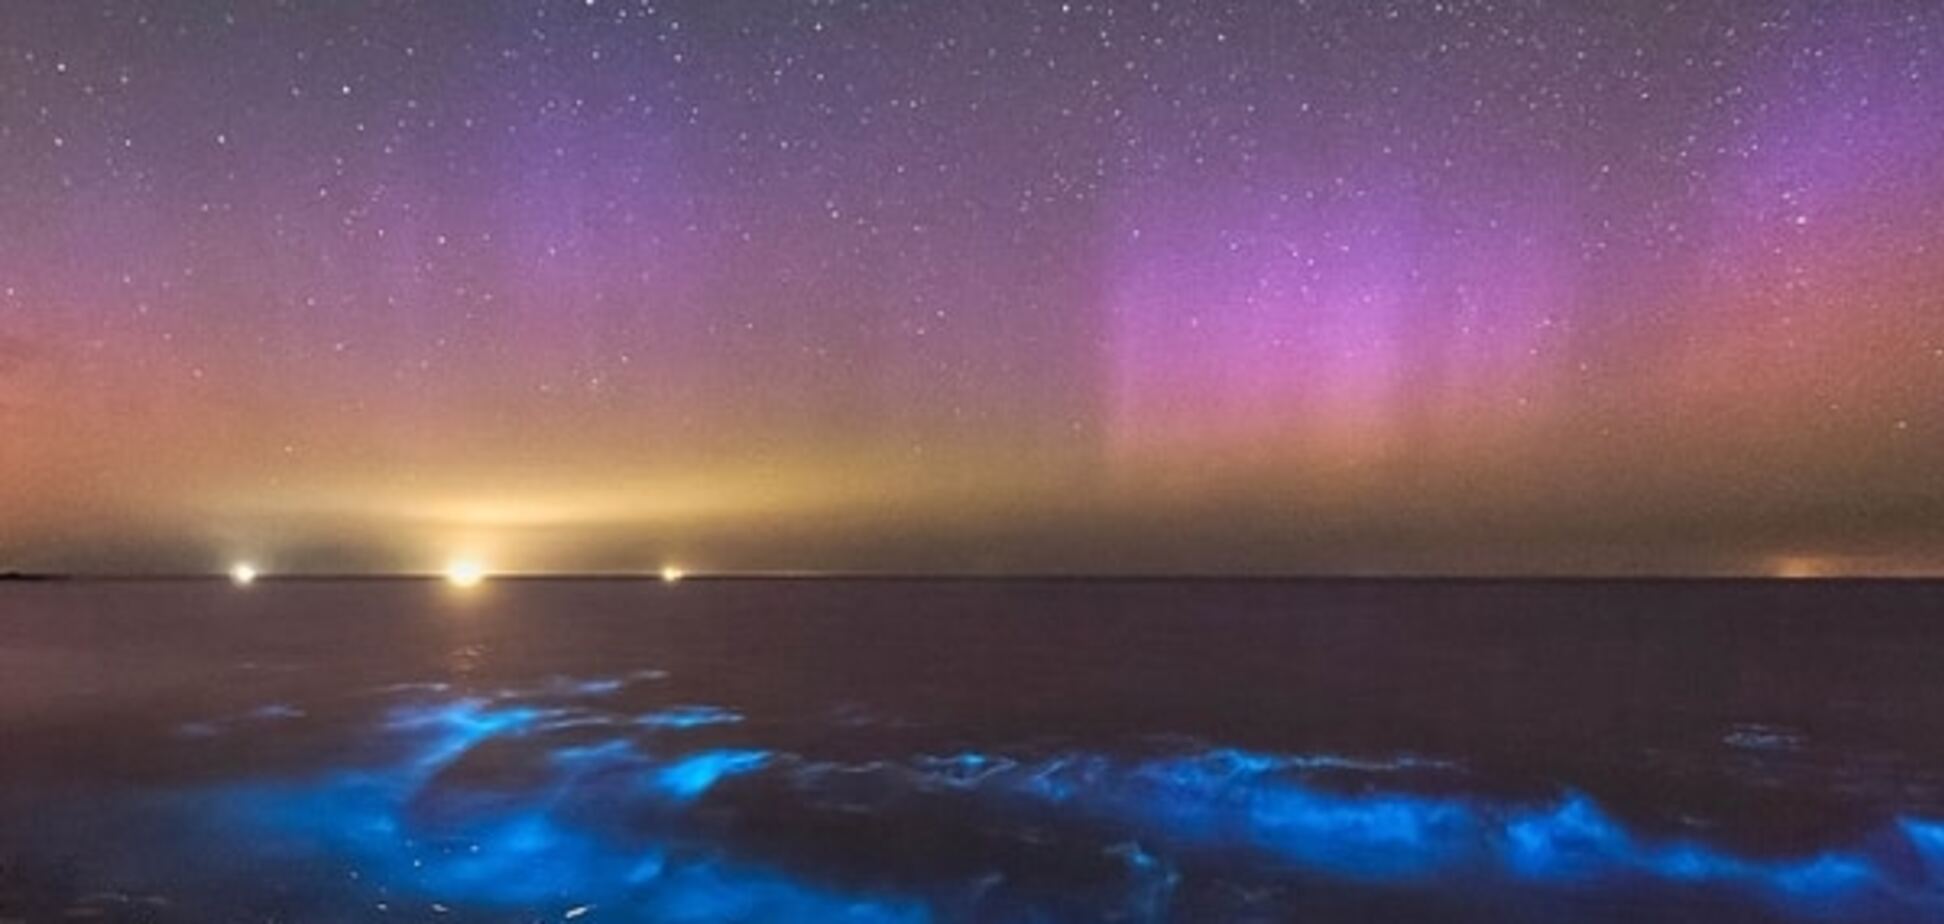 В небе над Британией ночью взошла 'Аврора': фото феномена природы